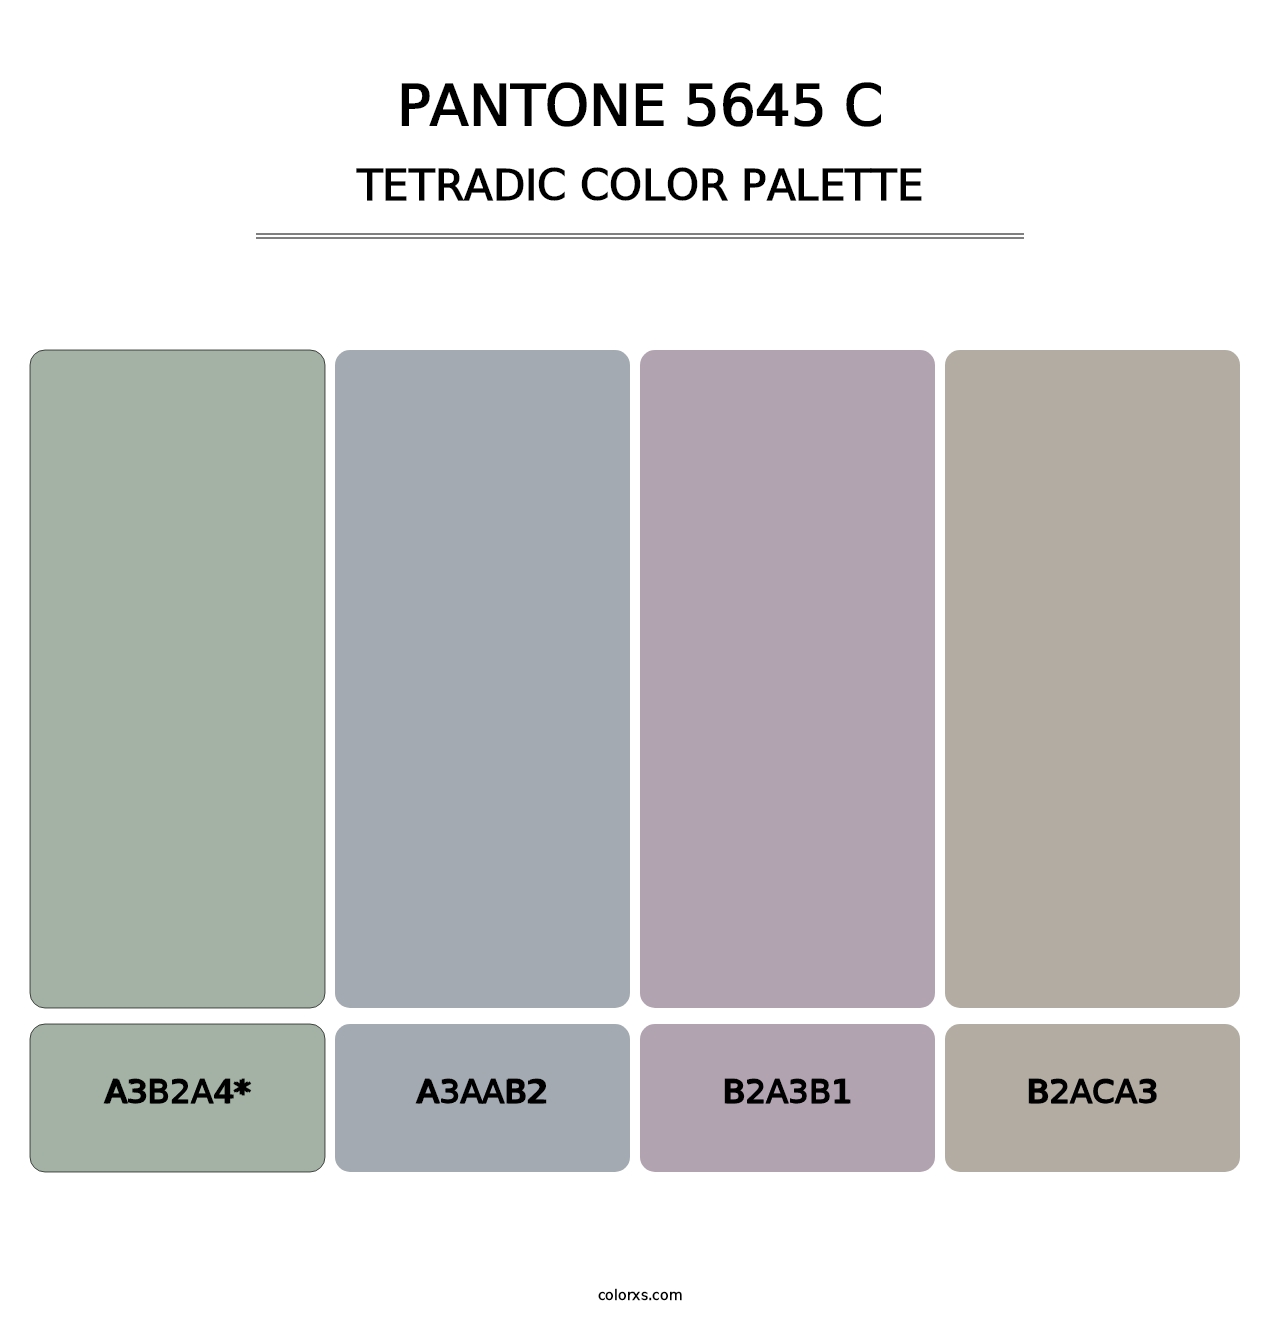 PANTONE 5645 C - Tetradic Color Palette